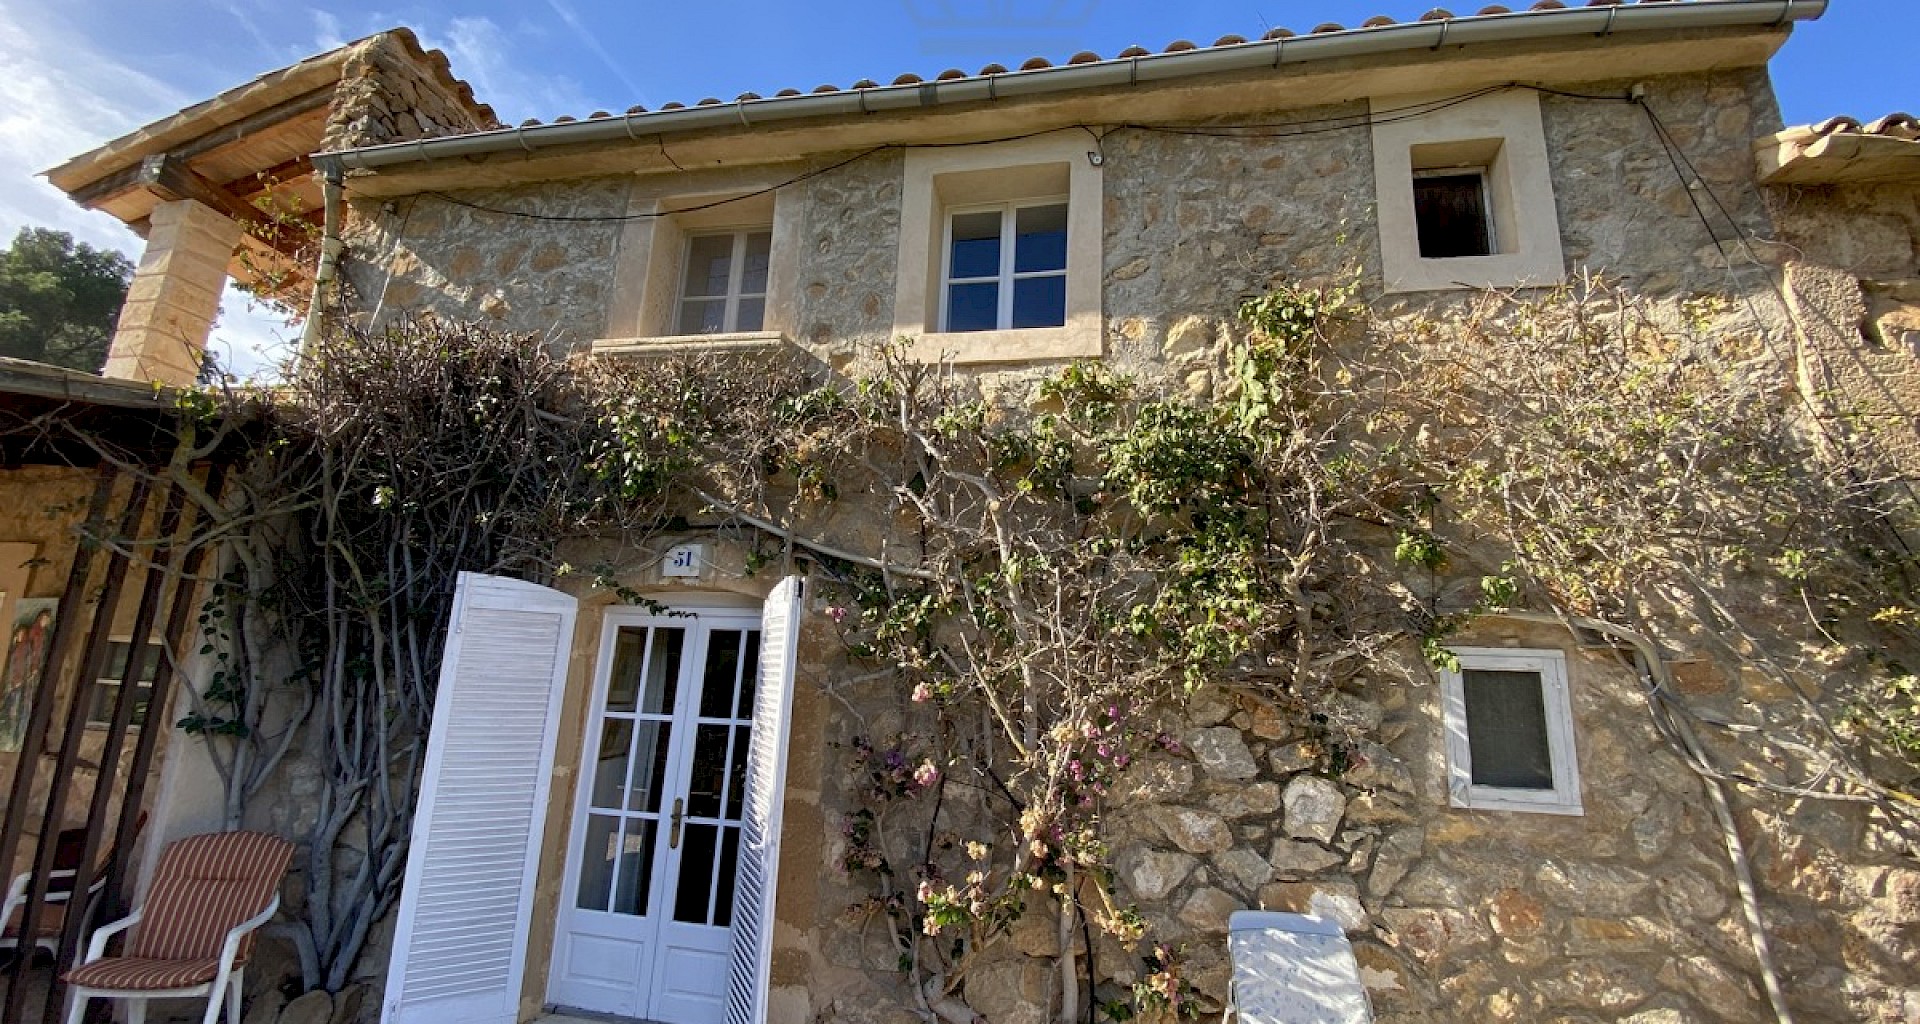 KROHN & LUEDEMANN Mediterranean Mallorca Finca/ country house in sought-after Andratx location Finca Andratx 28